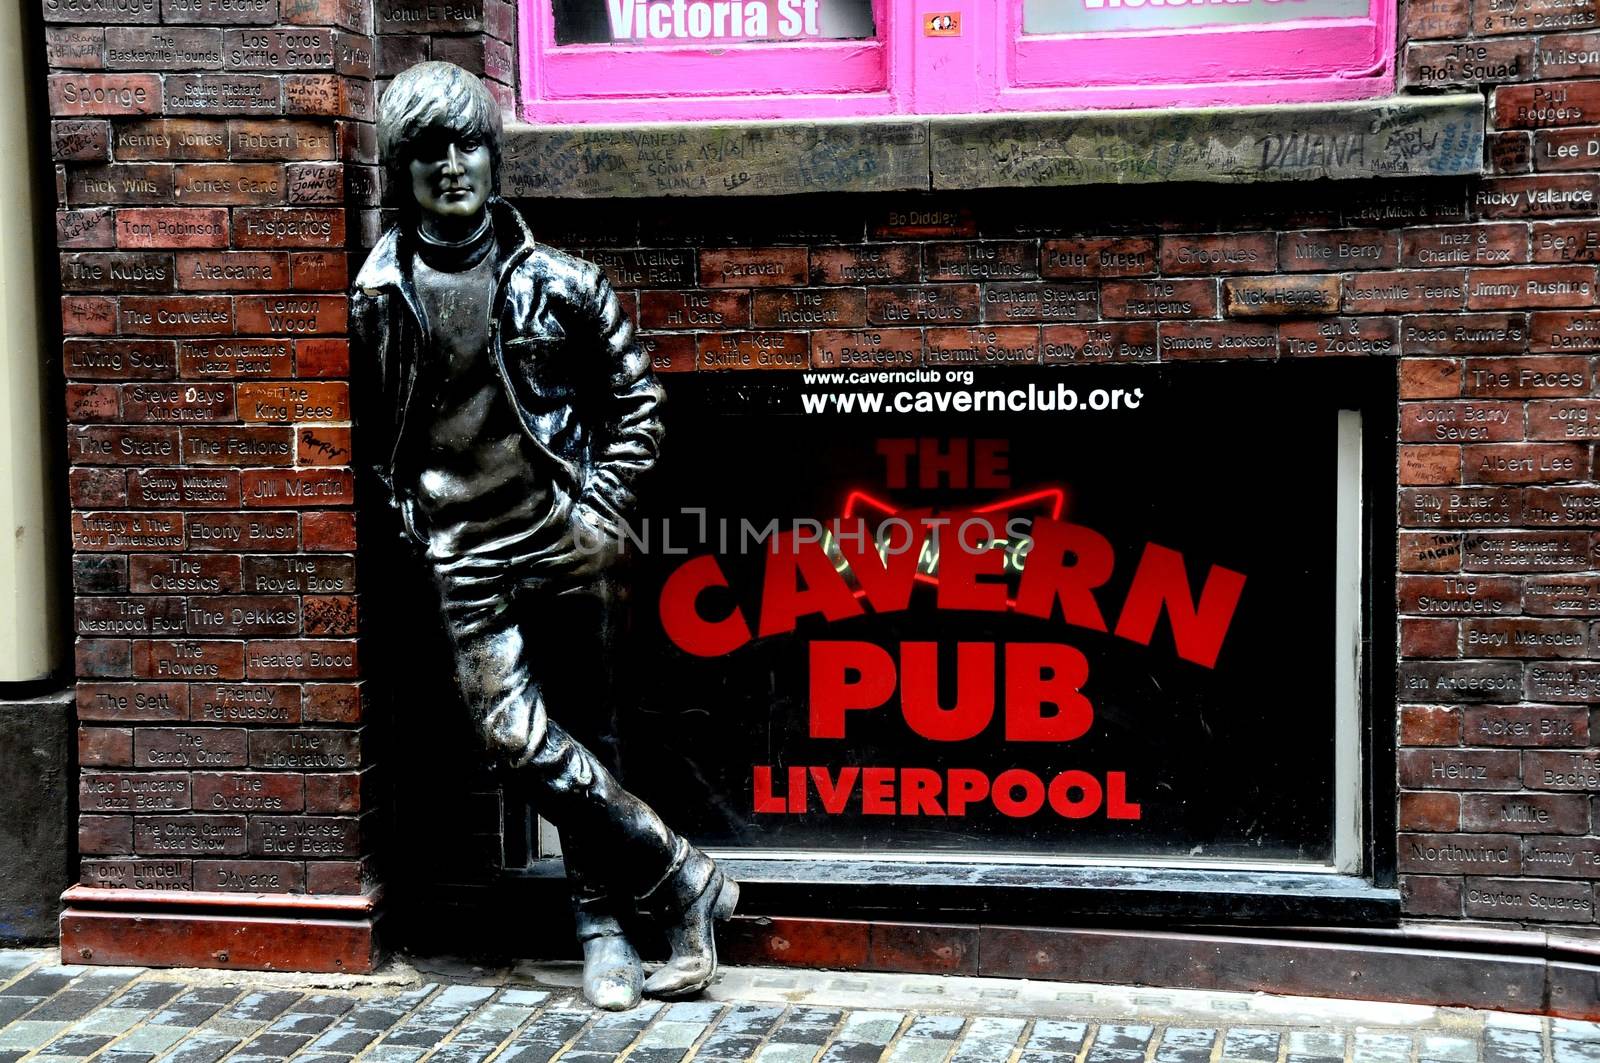 John Lennon statue in Liverpool